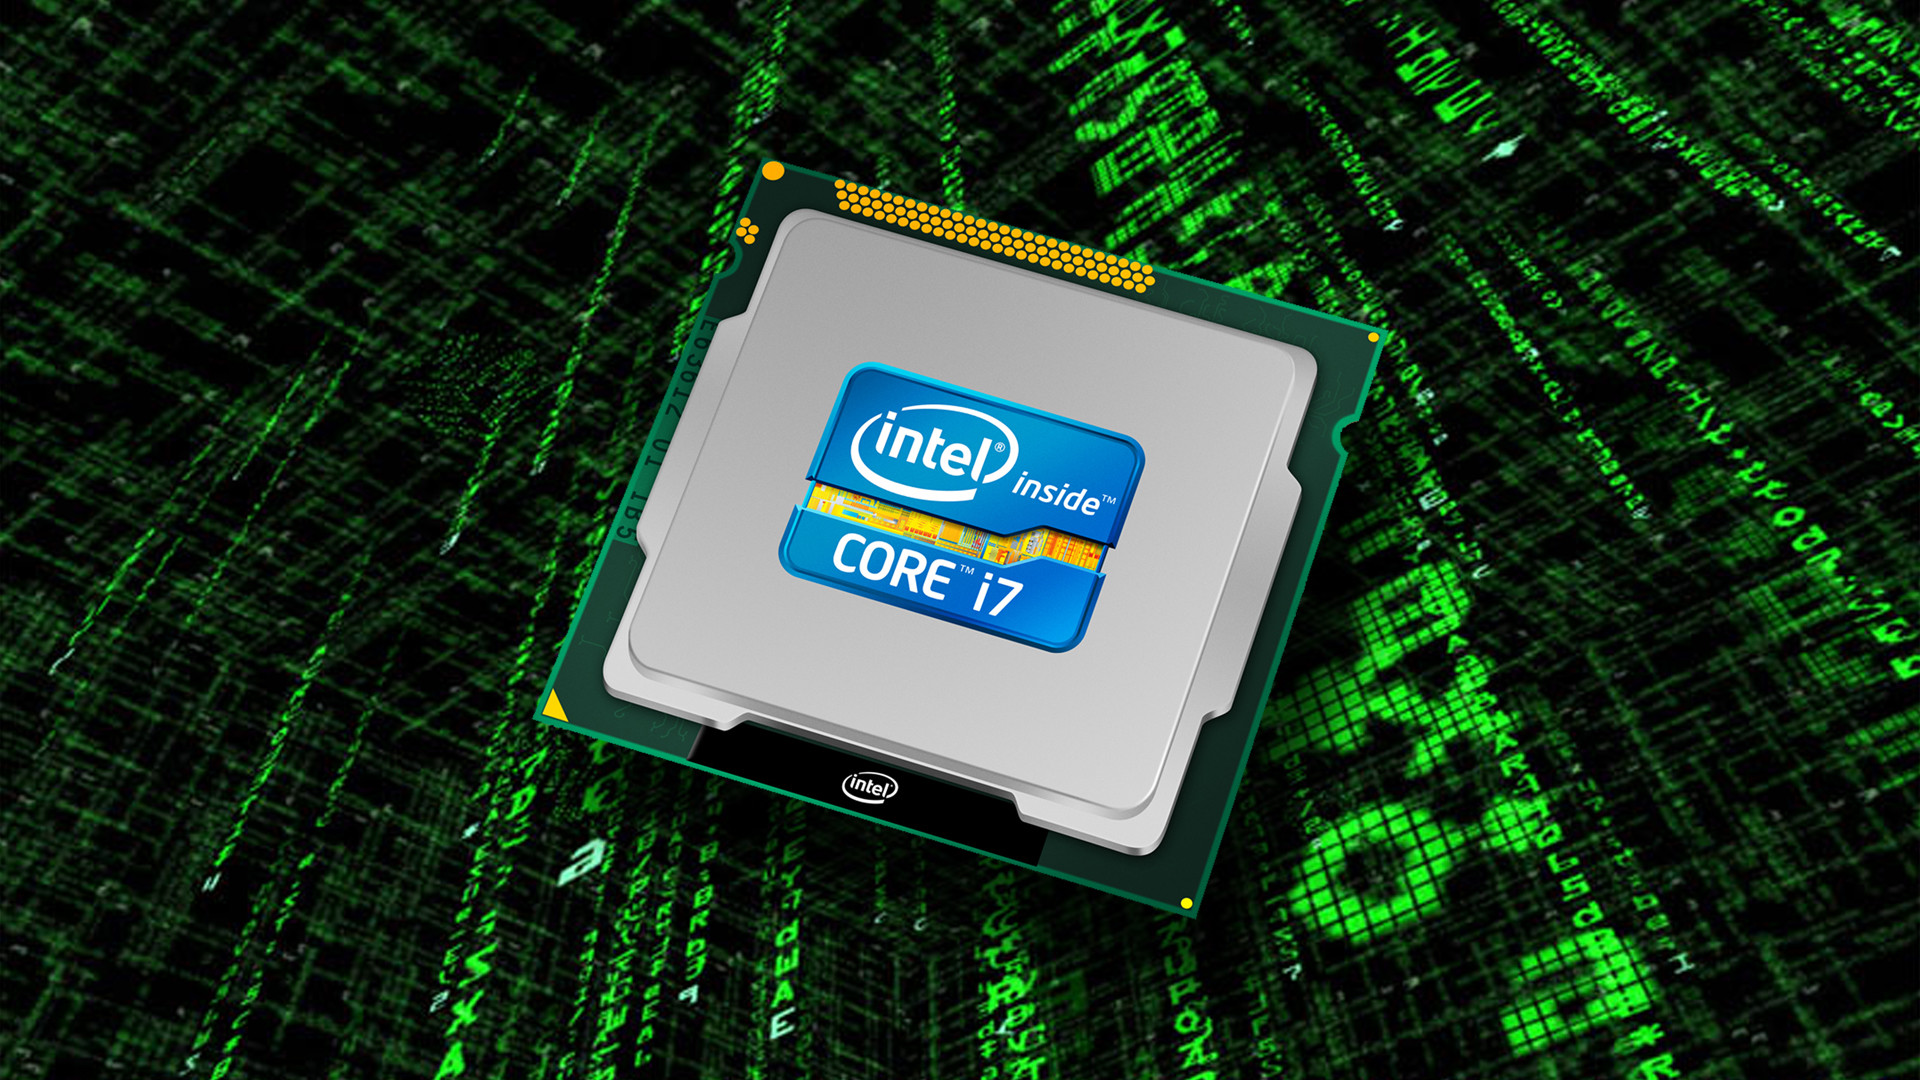 Intel i5 4400. Процессор i7 10700kf. Процессор Intel Core i4. Intel Core i7-10700kf. Процессор Intel Core i5 12400f.